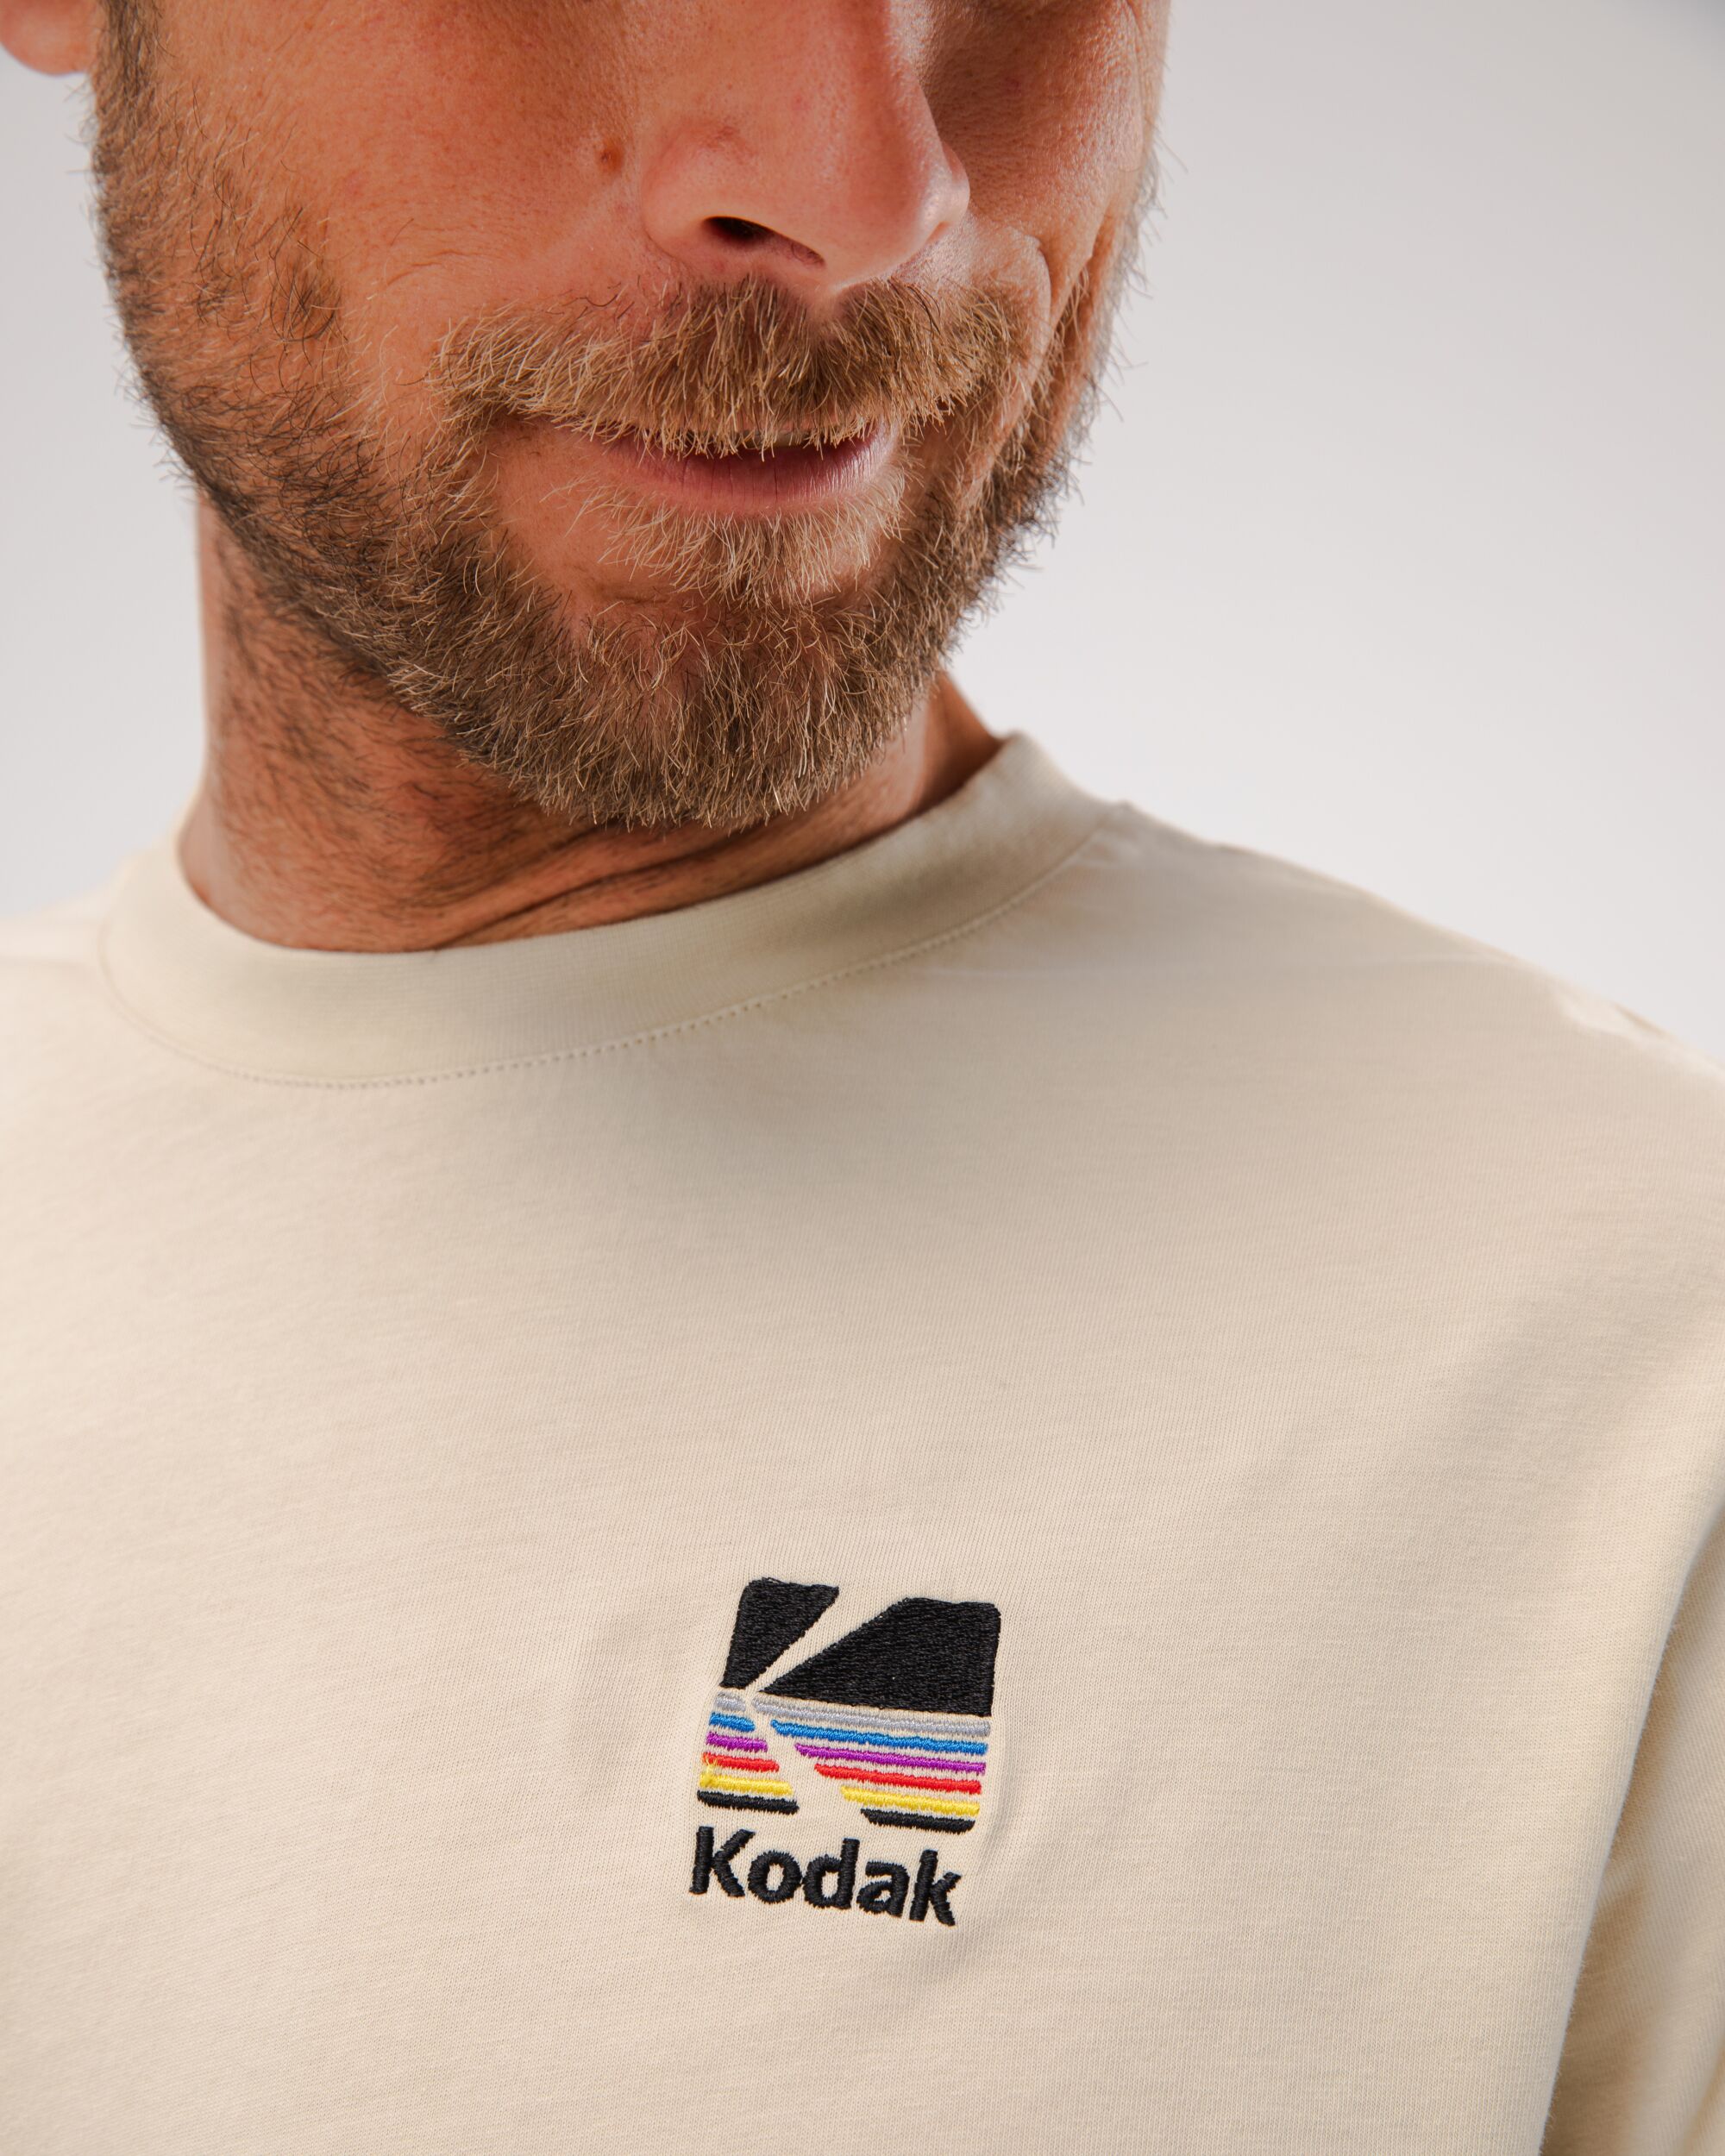 Kodak T-shirt Sand made from organic cotton by Brava Fabrics